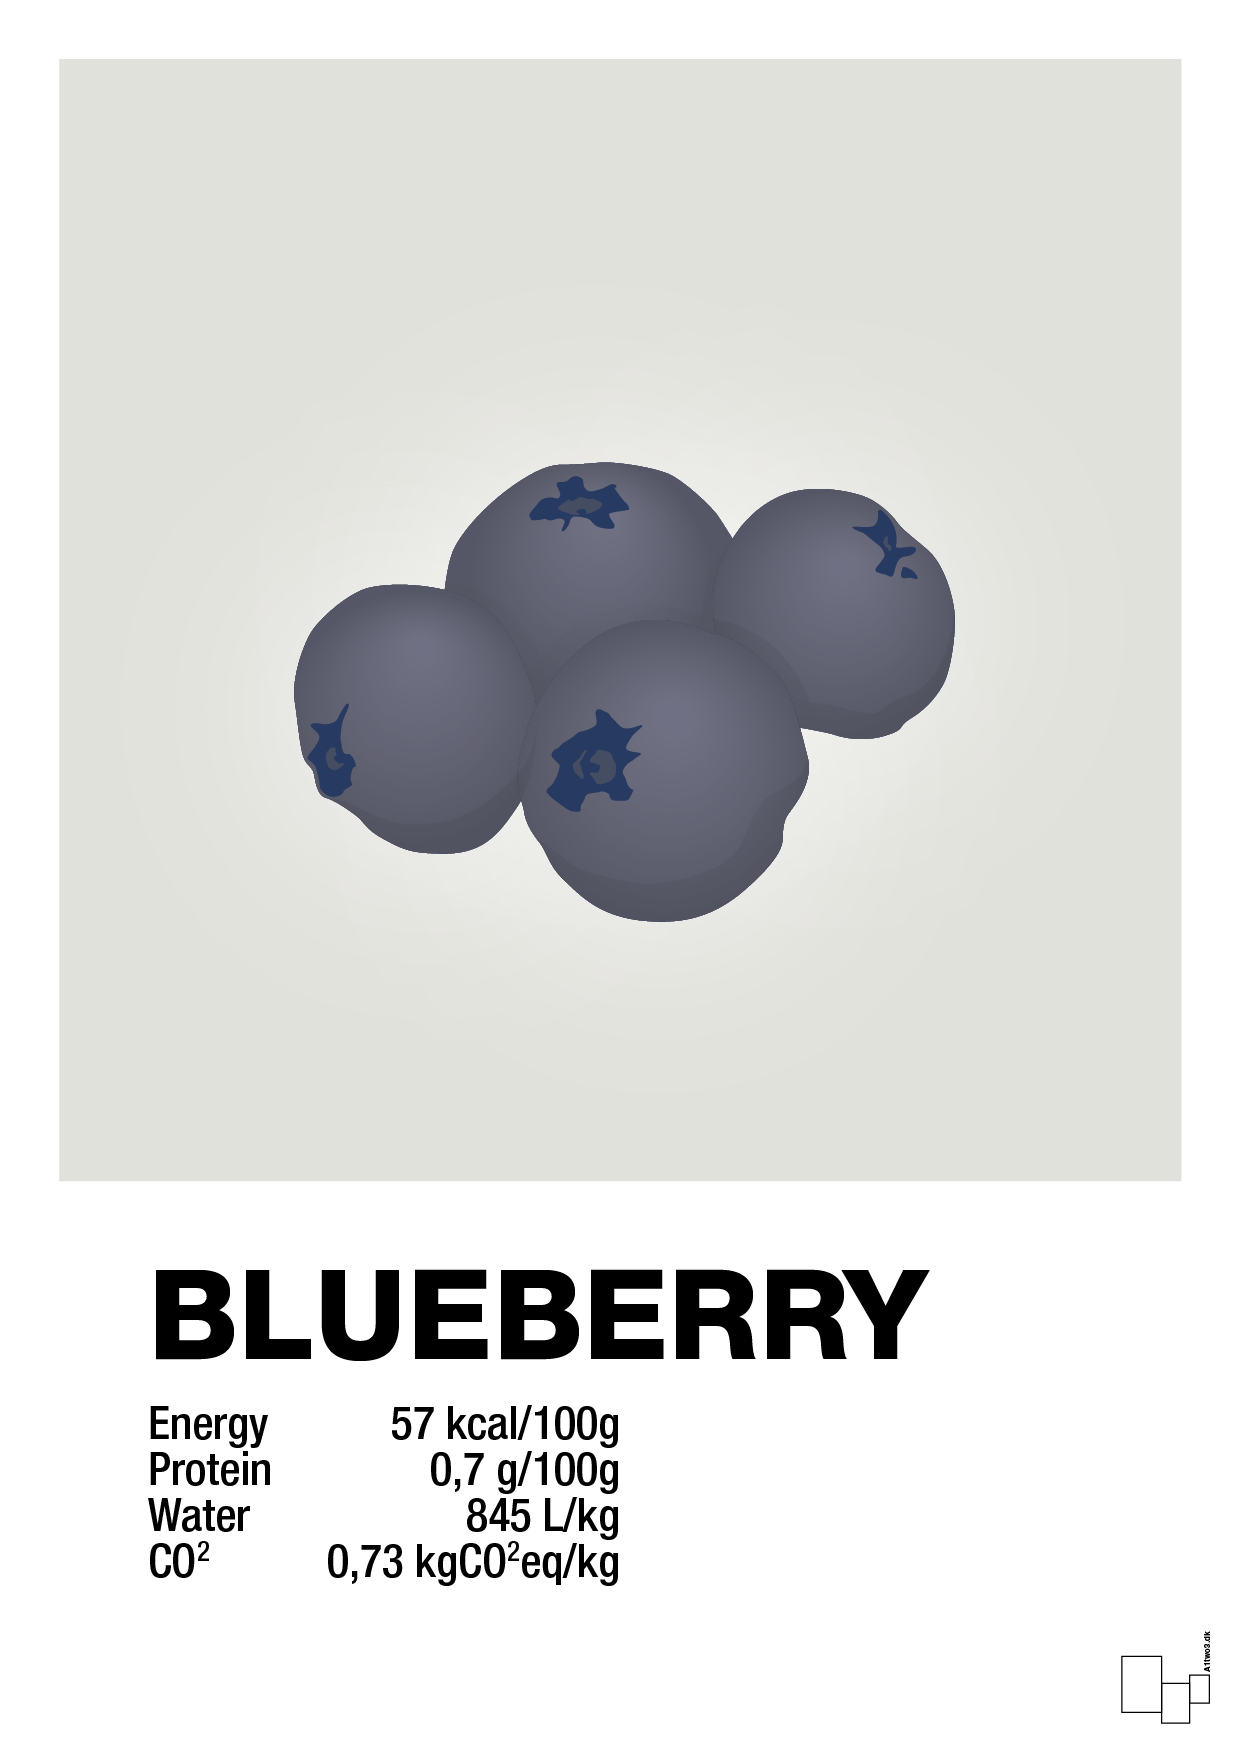 blueberry nutrition og miljø - Plakat med Mad & Drikke i Painters White